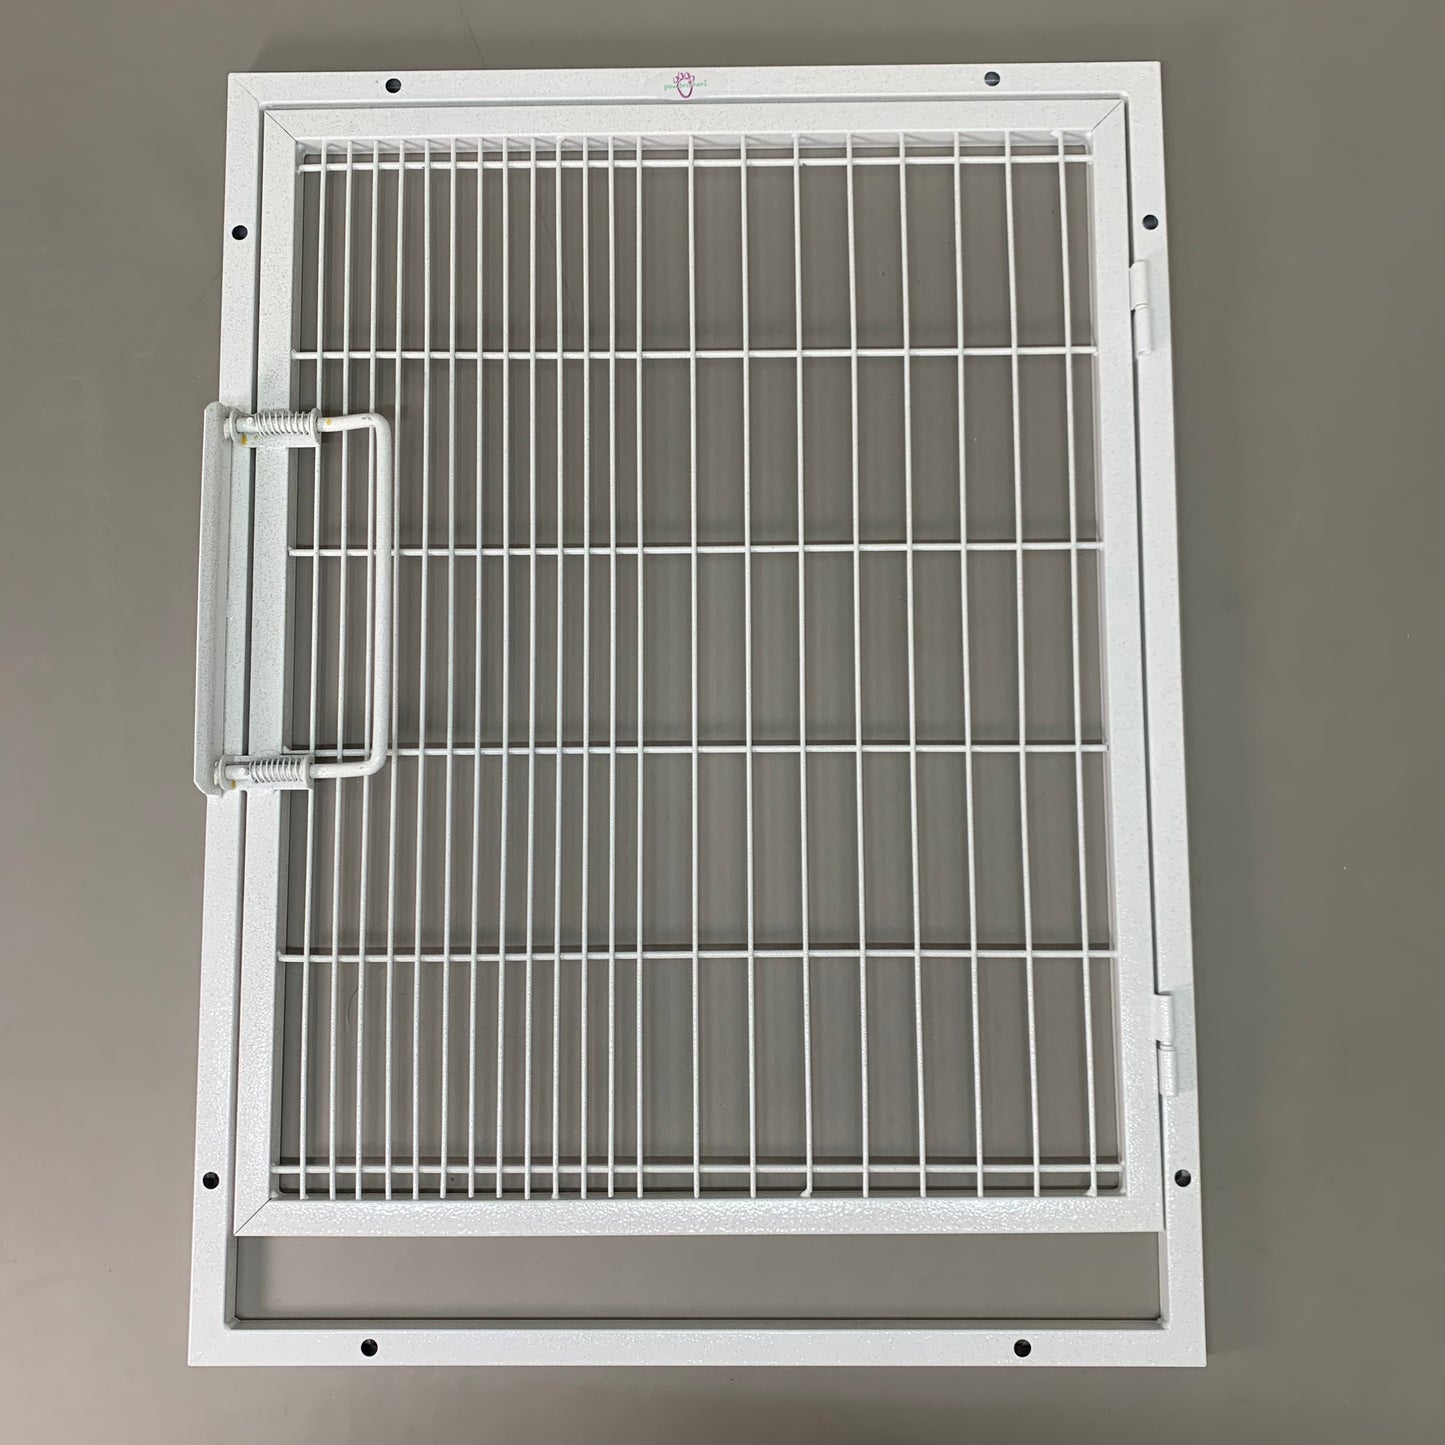 PAW BROTHERS Medium White Modular Cage Without Pans & Grates 21.75" x 29.5" PBP89421